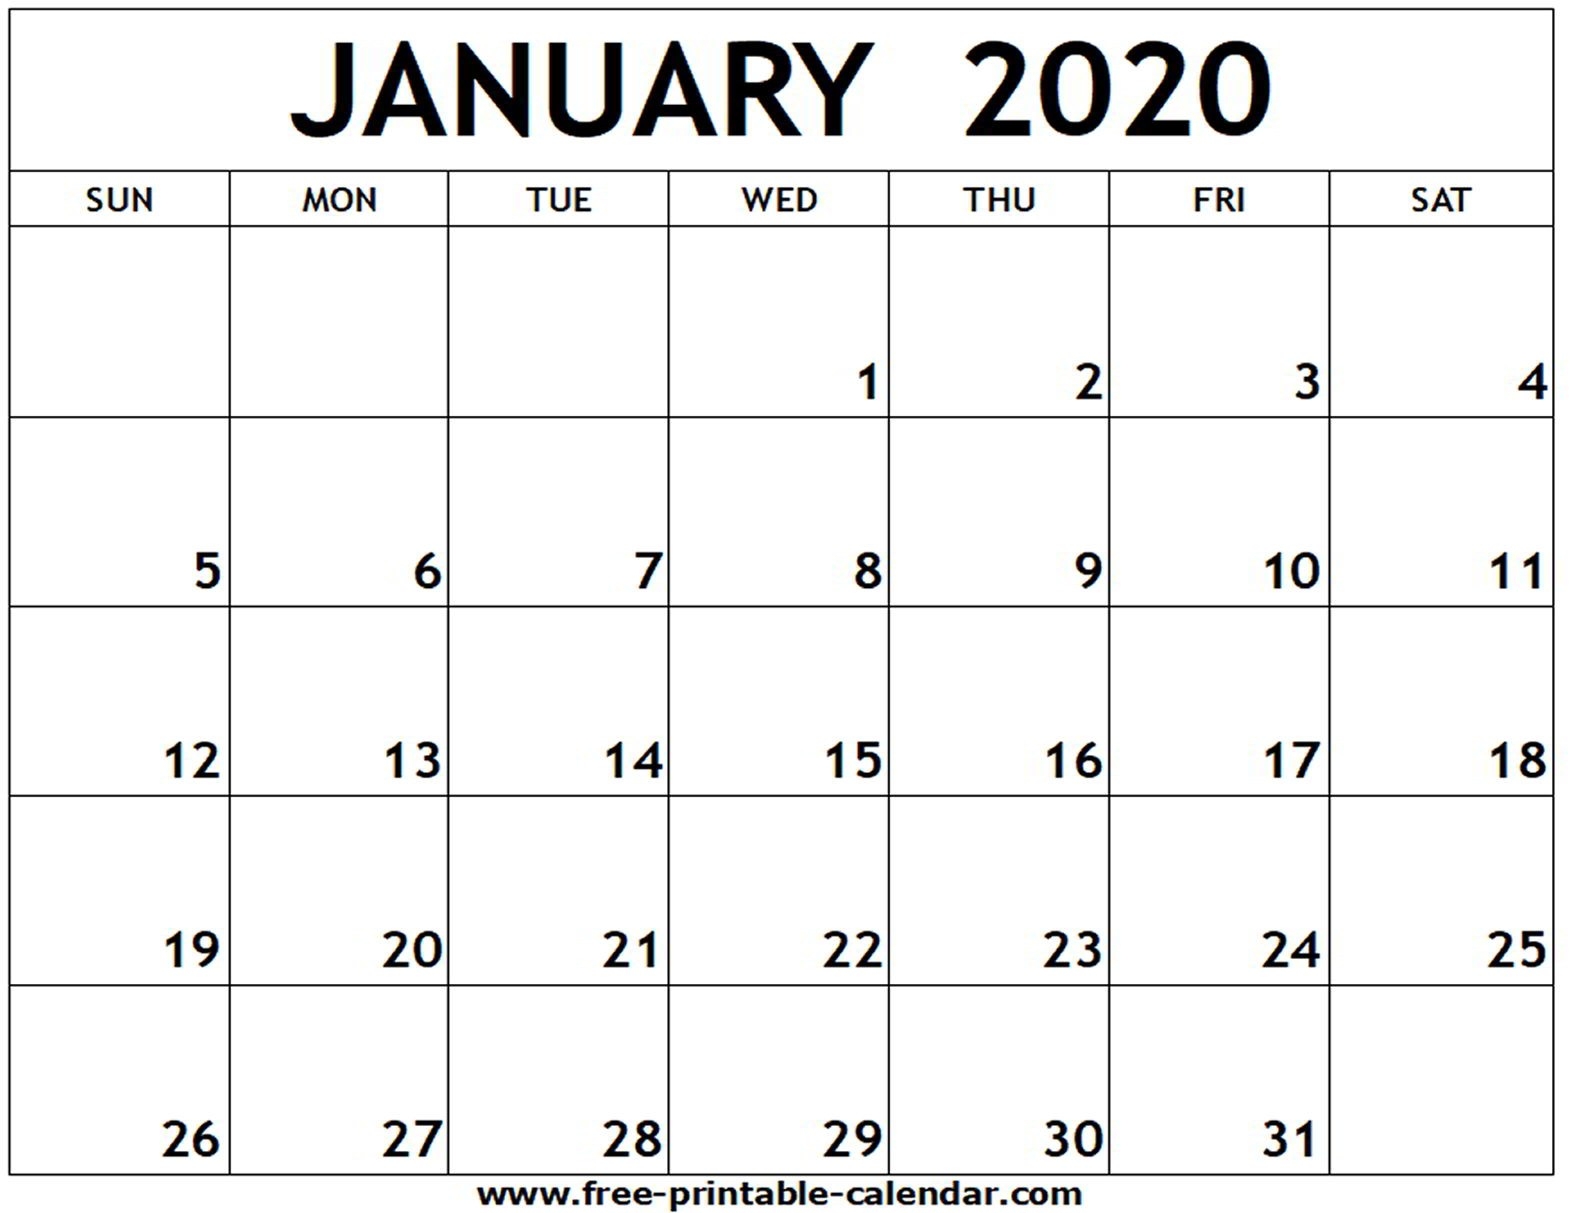 January 2020 Printable Calendar - Free-Printable-Calendar-January 2020 Calendar Uk